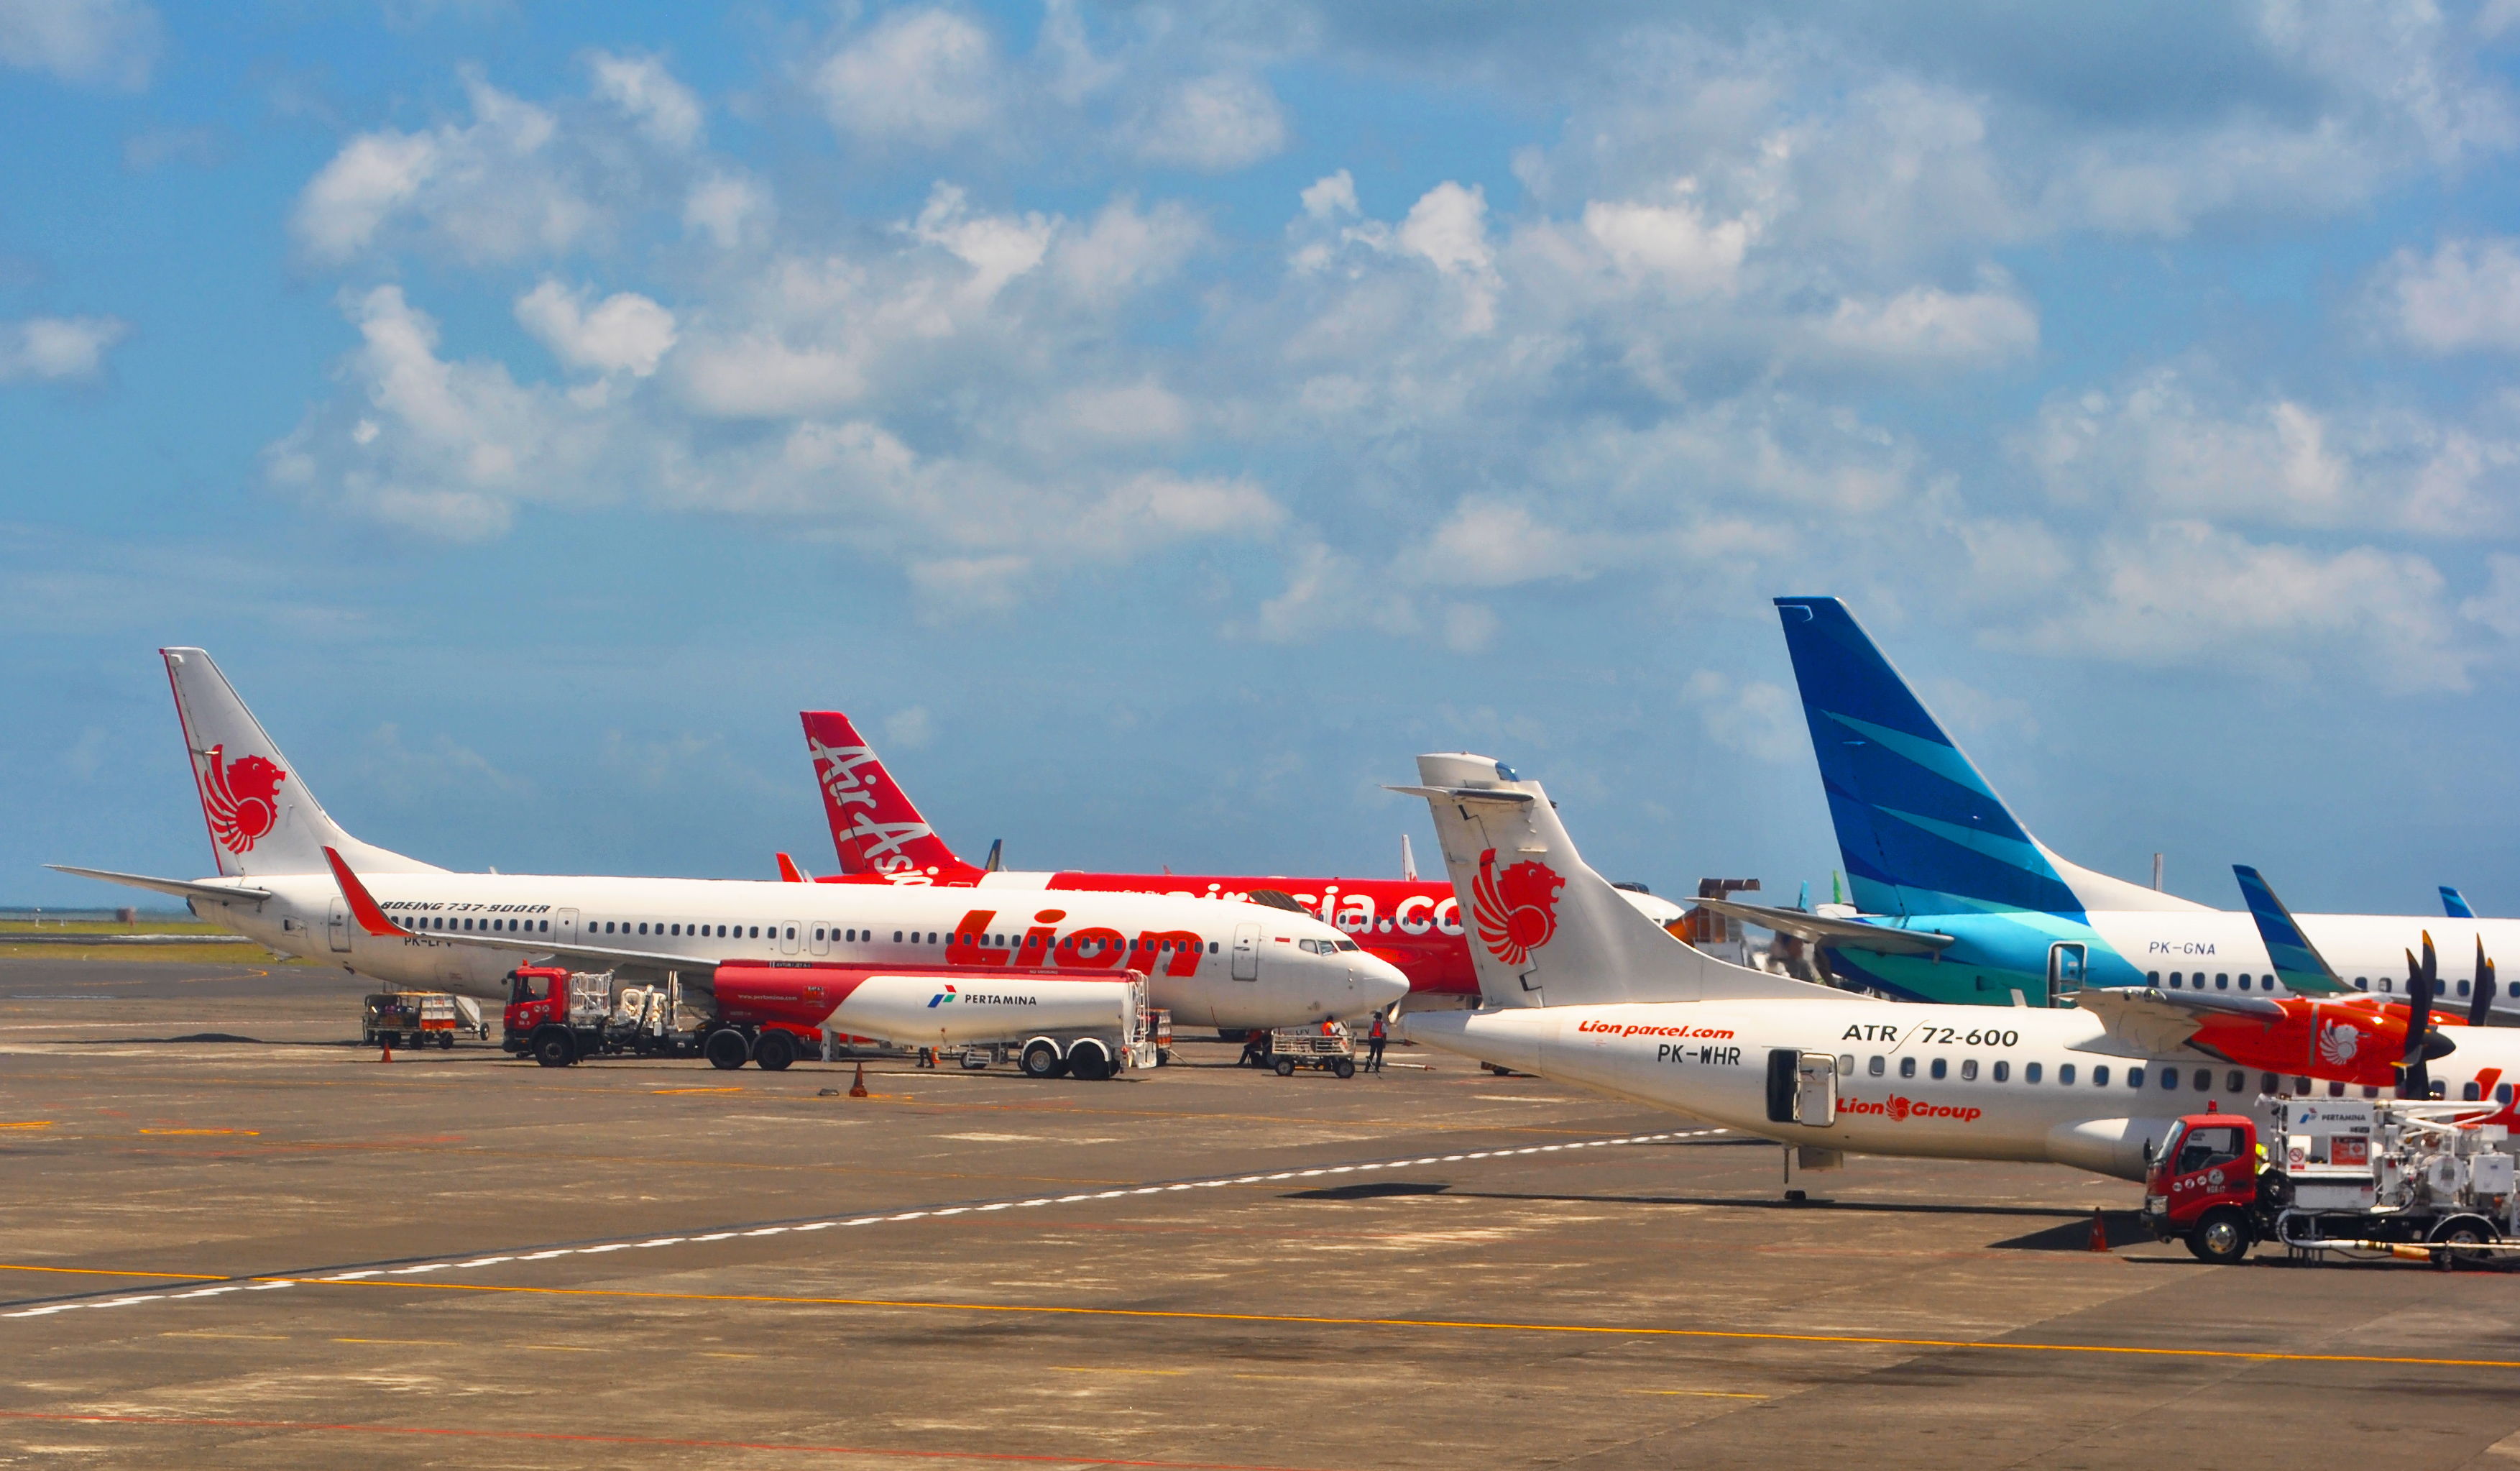 Bali Airport Falls Short on Key Passenger Rights Indicators